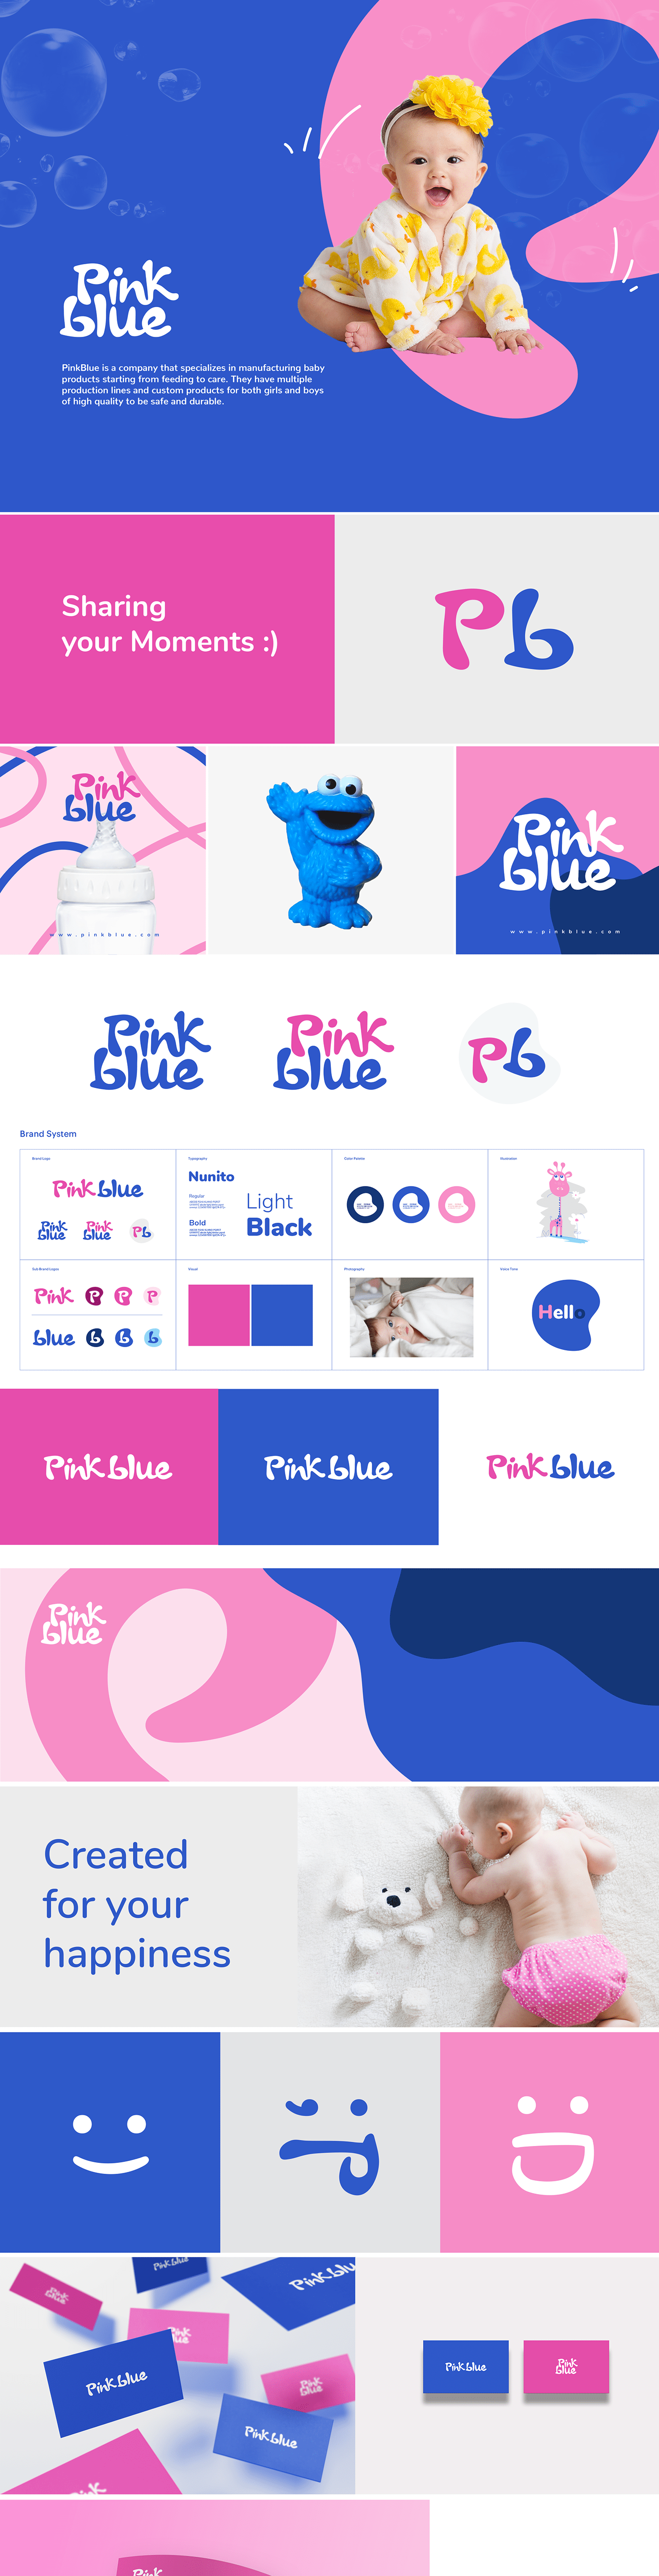 PinkBlue Brand Identity Design. :: Behance